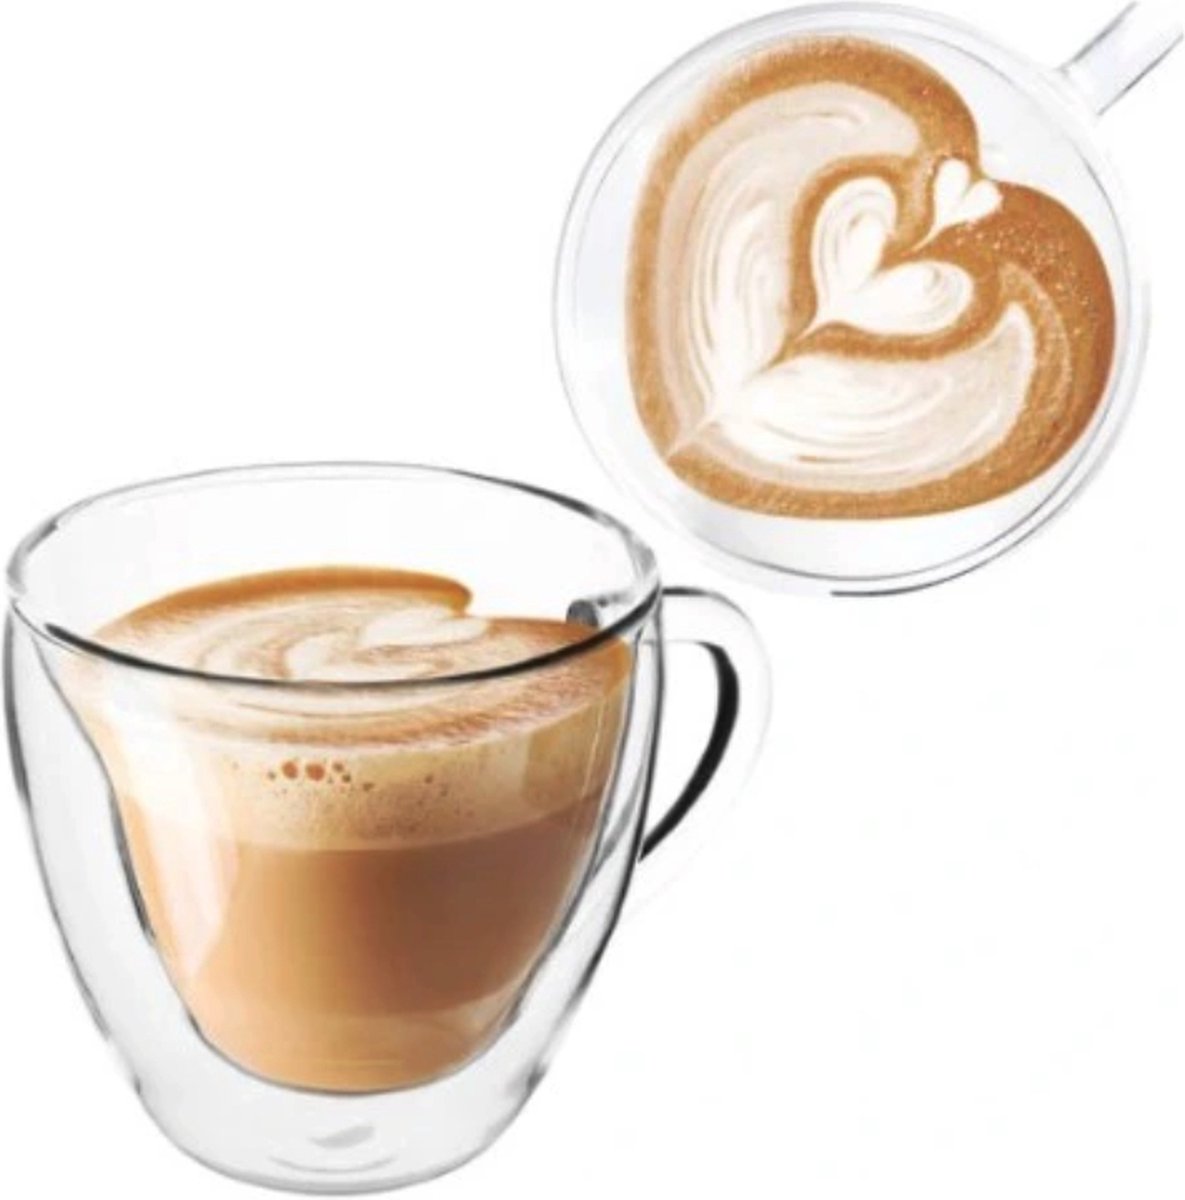 Dubbelwandig Cappuccino glas - Latte macchiato glas - Theeglas - Hartvormig- 250ml - 1 stuk